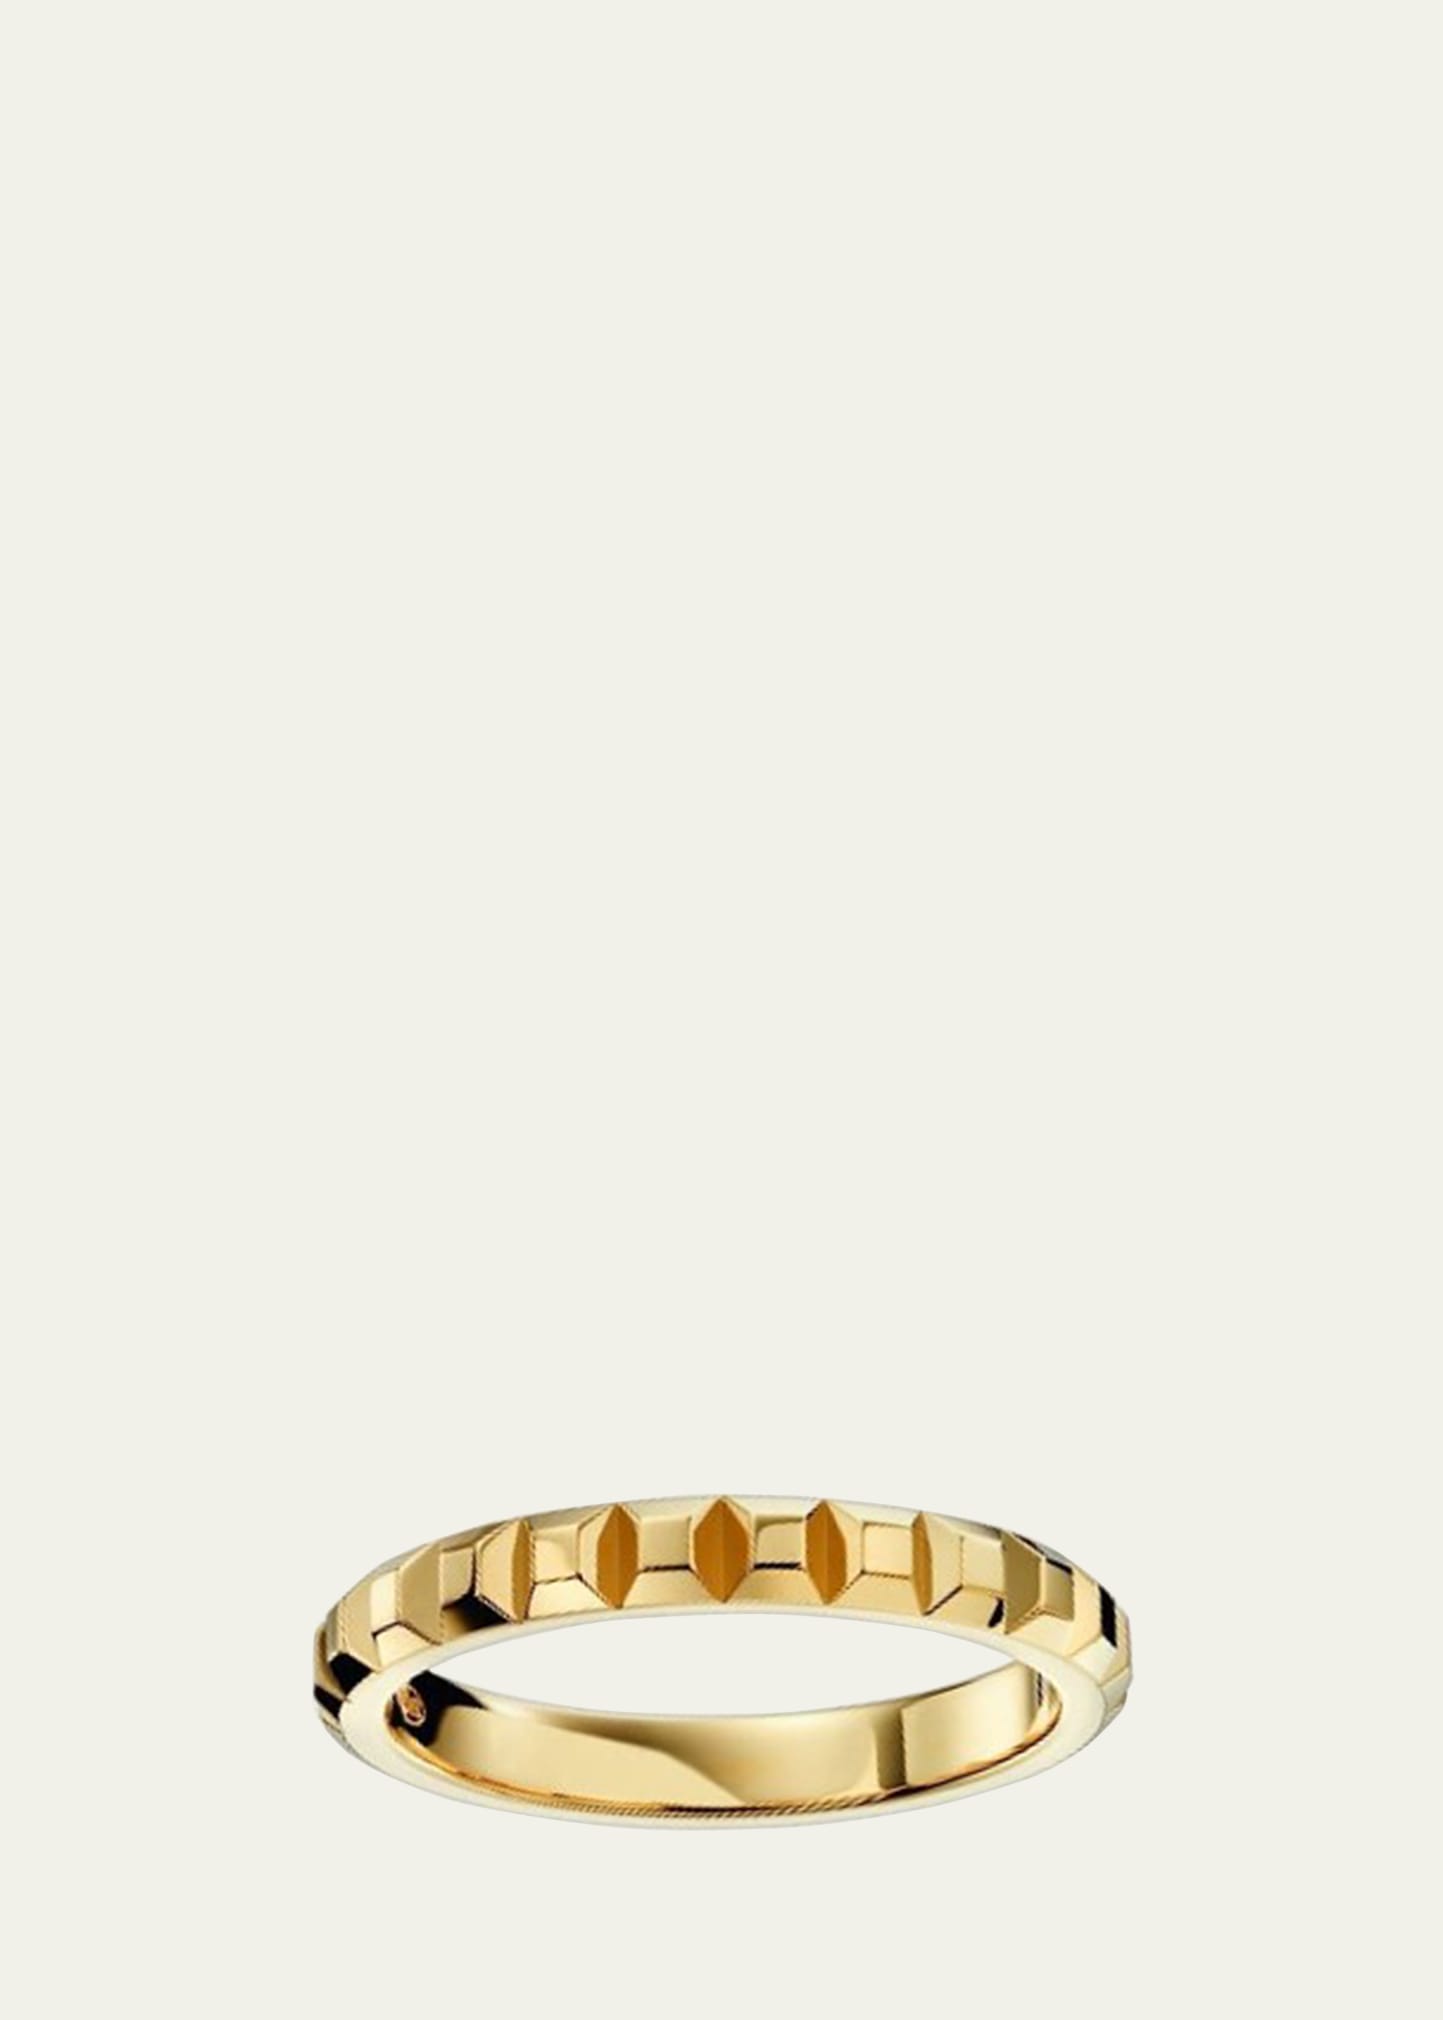 Boucheron Quatre Clou de Paris Medium Yellow Gold Wedding Band Ring, Size 5.5